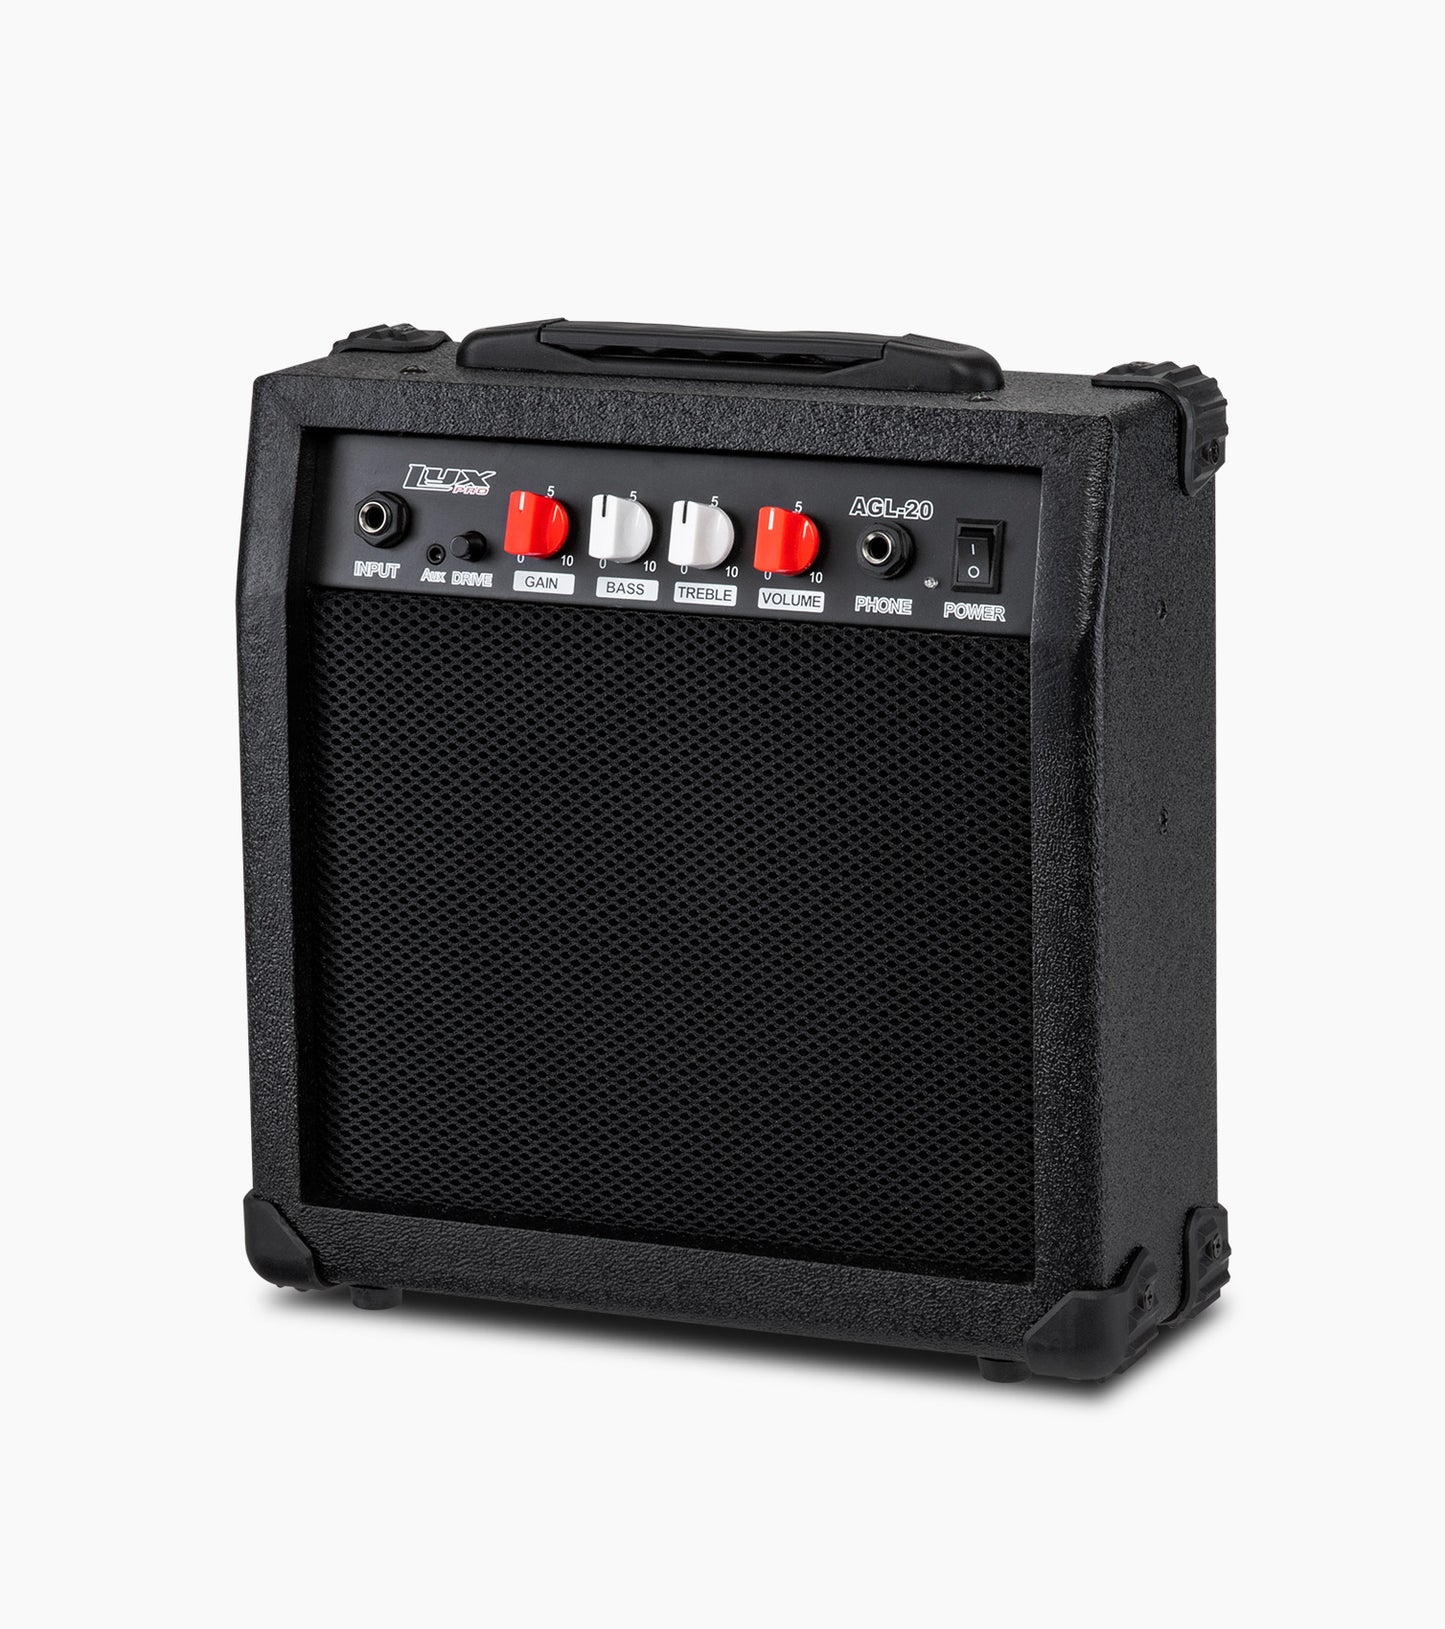  black 20 watt electric guitar amplifier